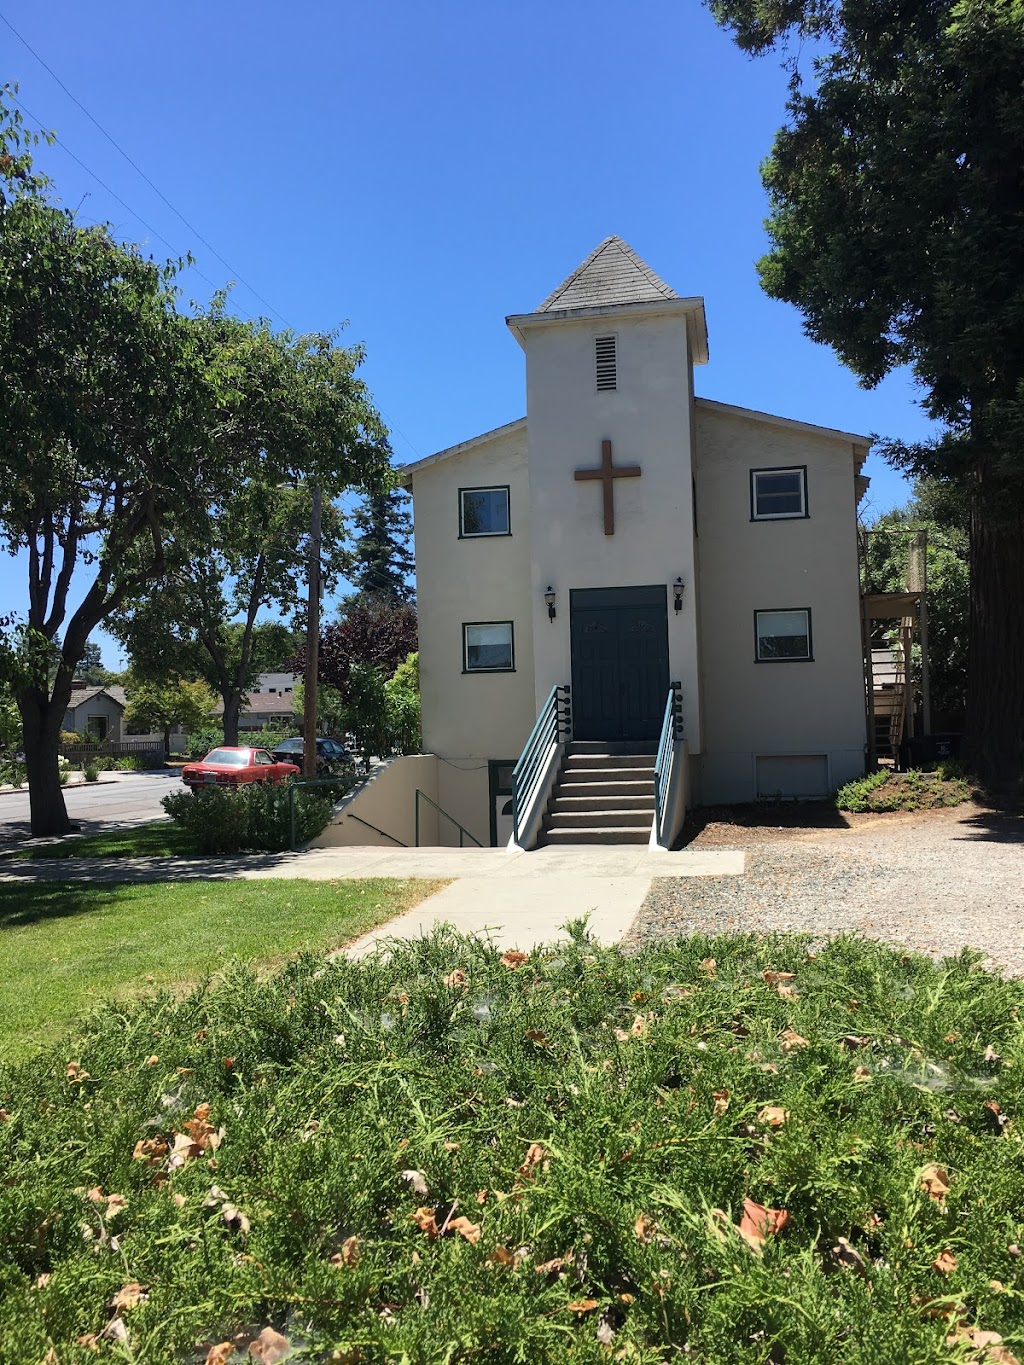 Shoreline Community Church | 211 Church St, Mountain View, CA 94041, USA | Phone: (650) 968-2868